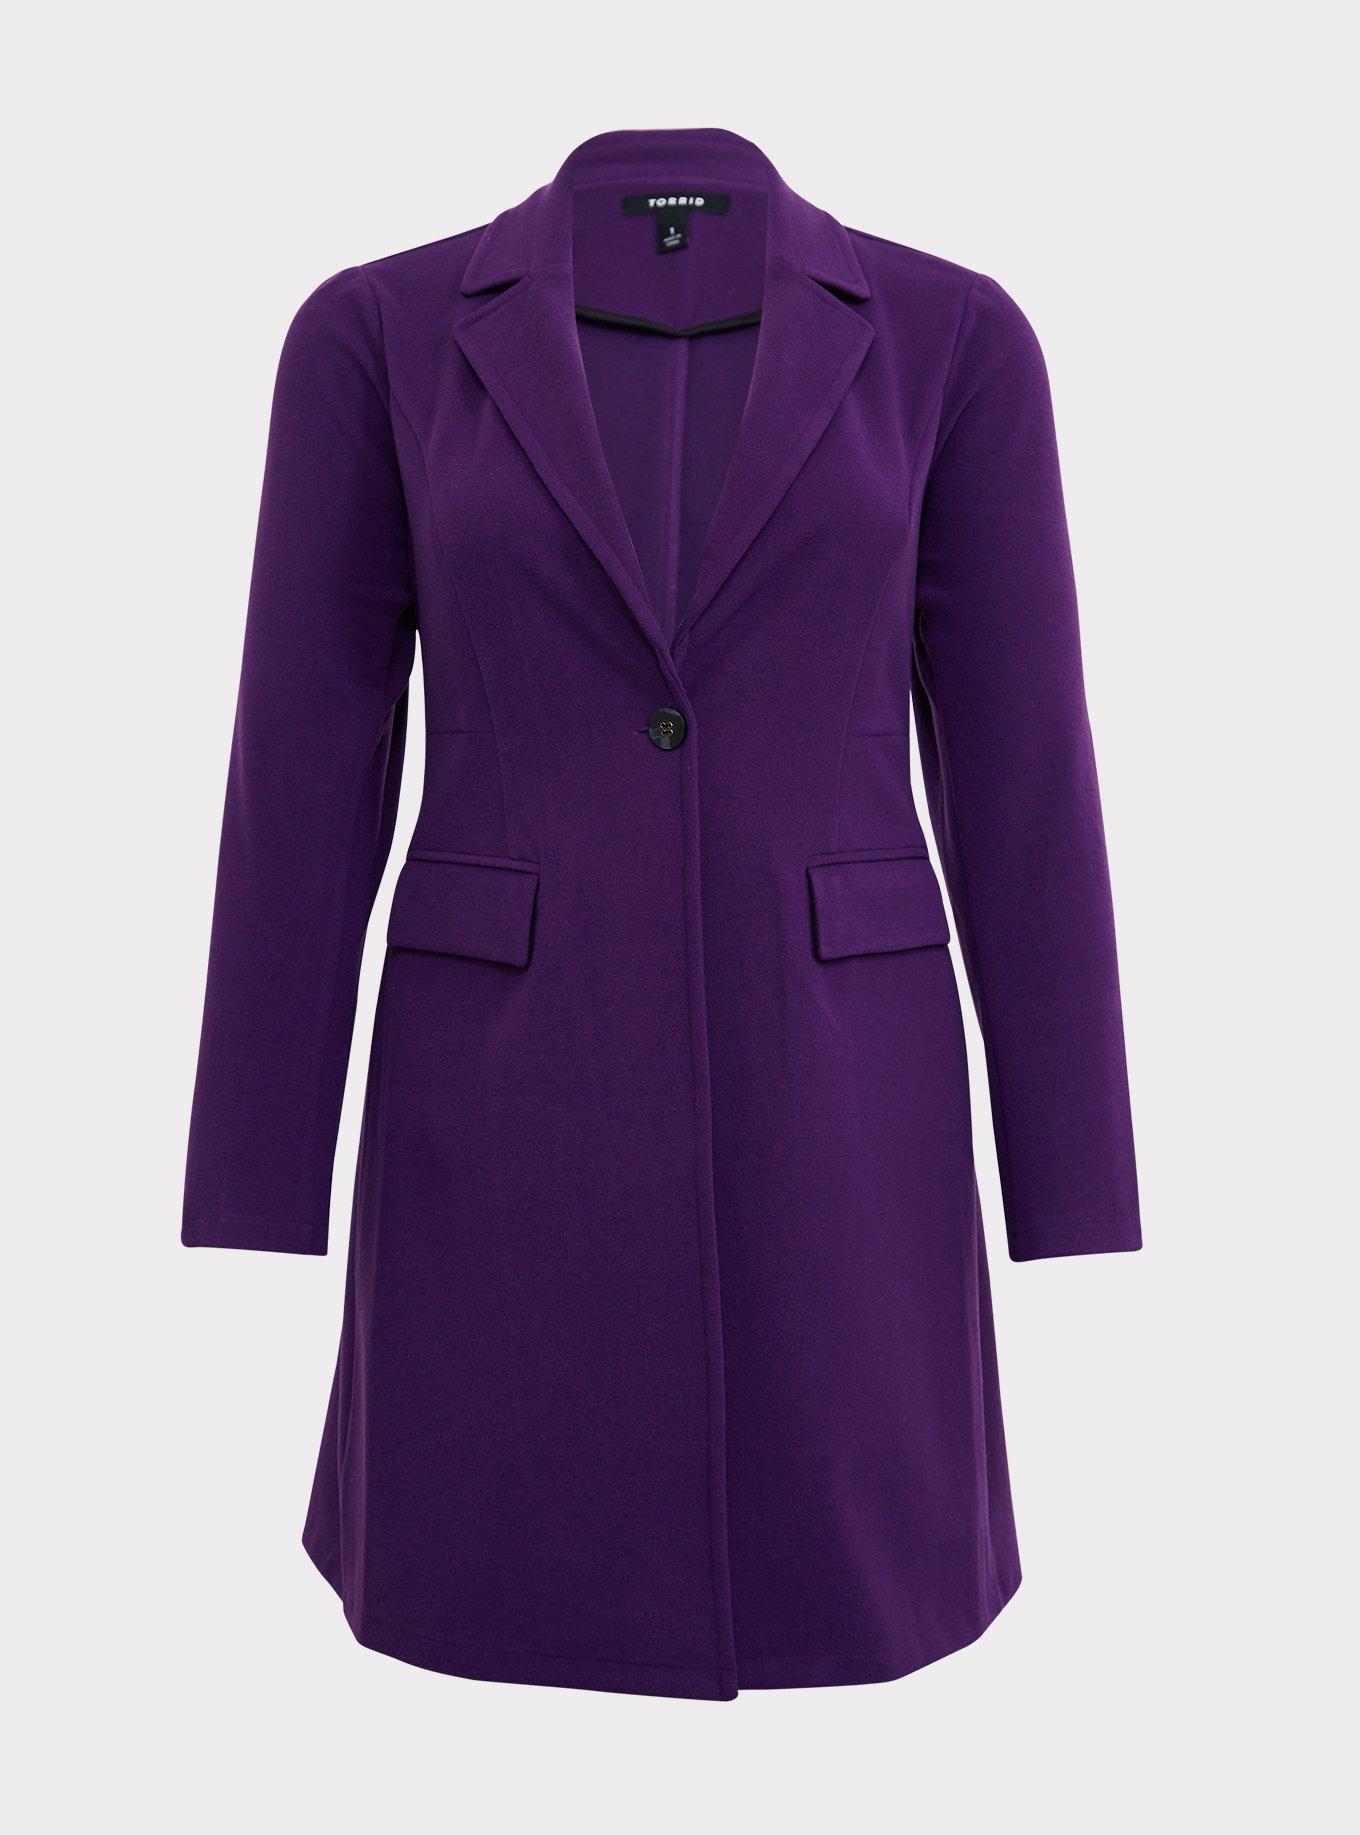 NWT Torrid Women's 3X 22-24 Faux Fur Trim Jacket, Light Purple